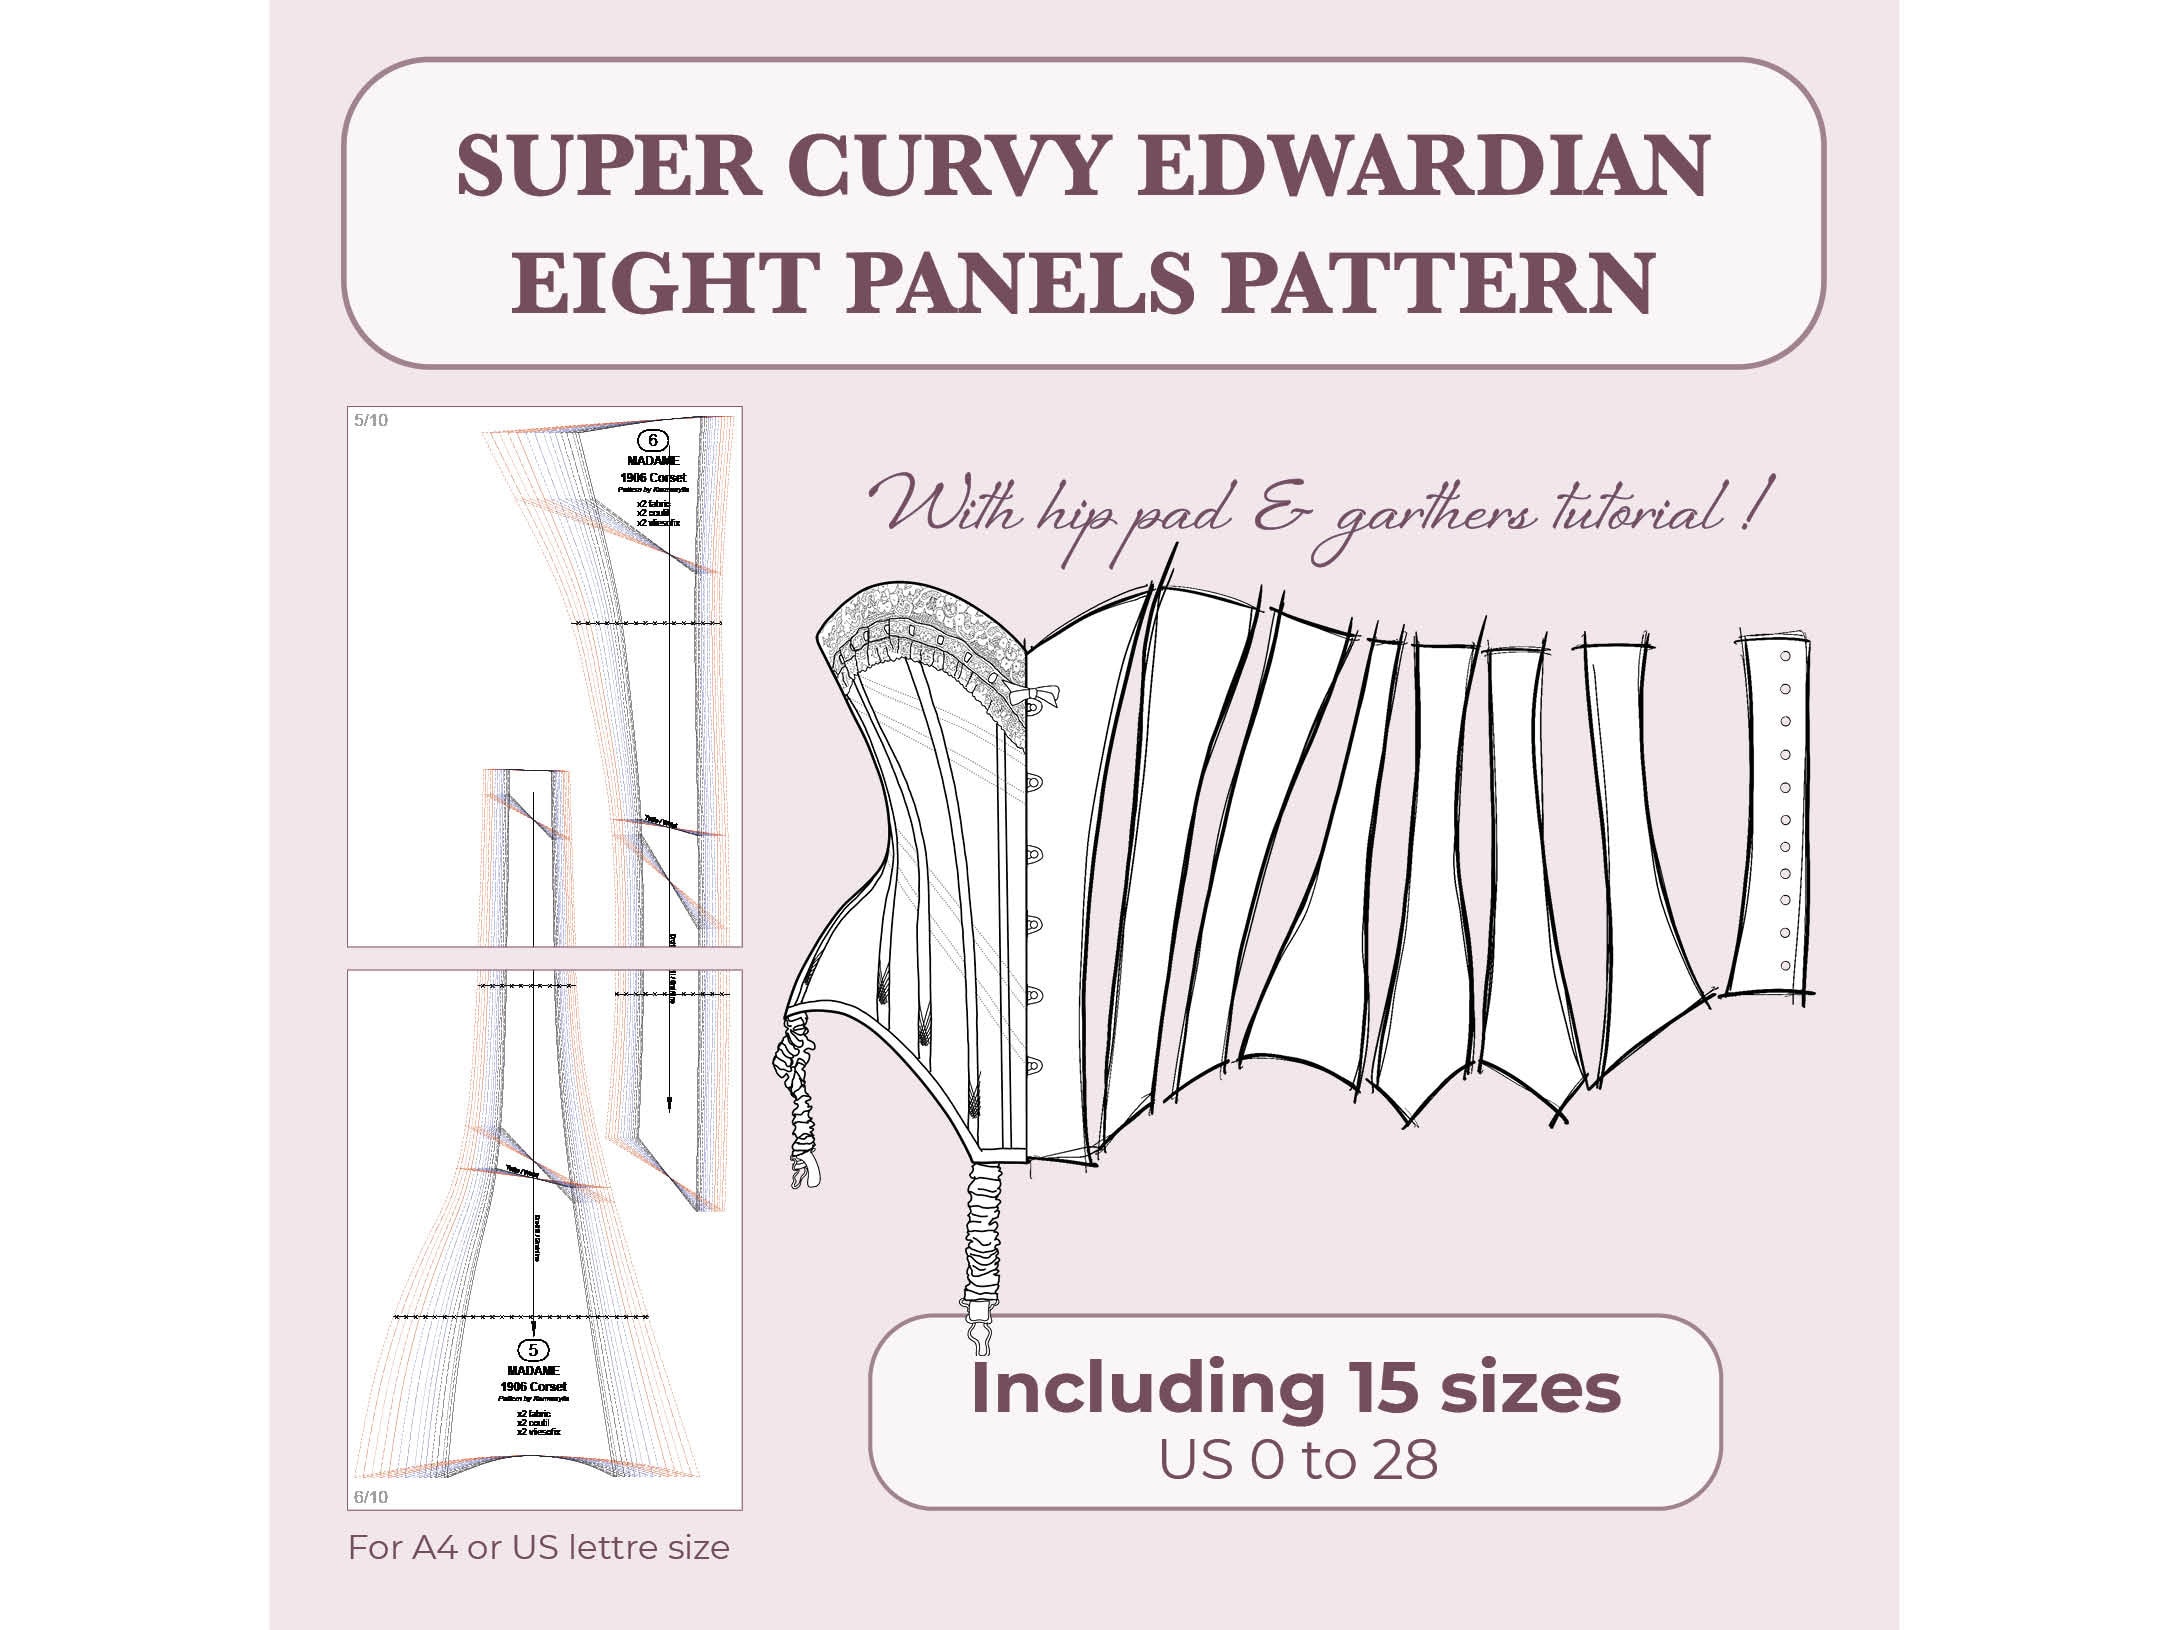 Edwardian Corset Pattern 1906 Ref Madame US Size 0 to 28